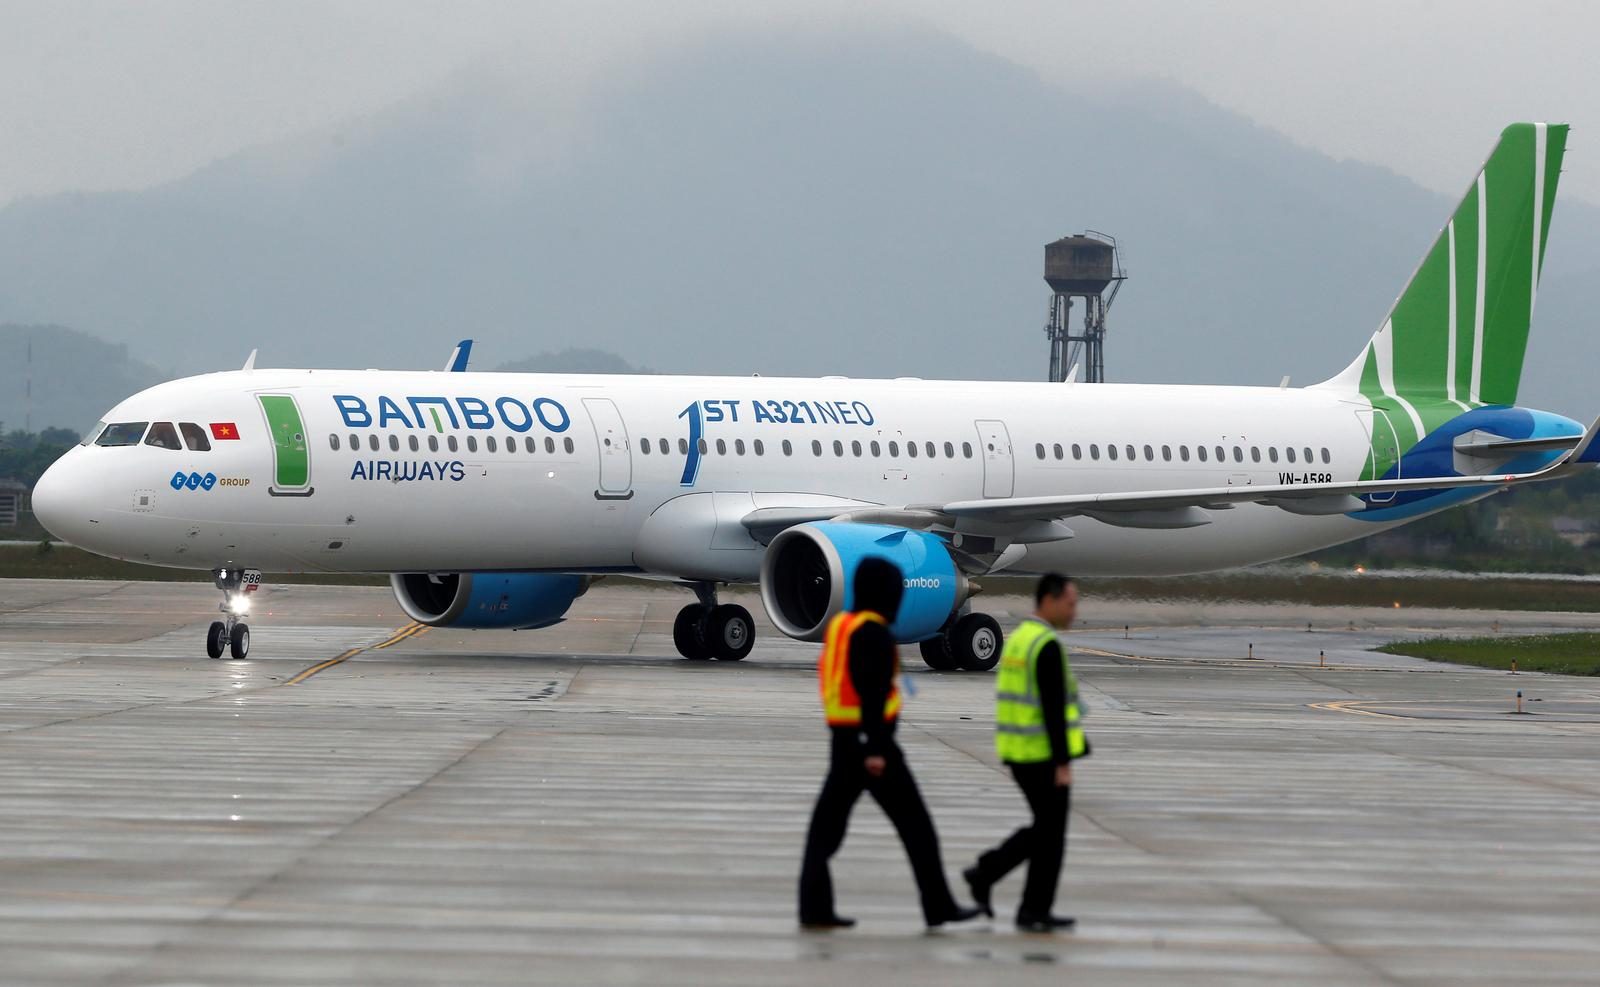 Vietnam’s Bamboo Airways plans to raise $100m via IPO next year